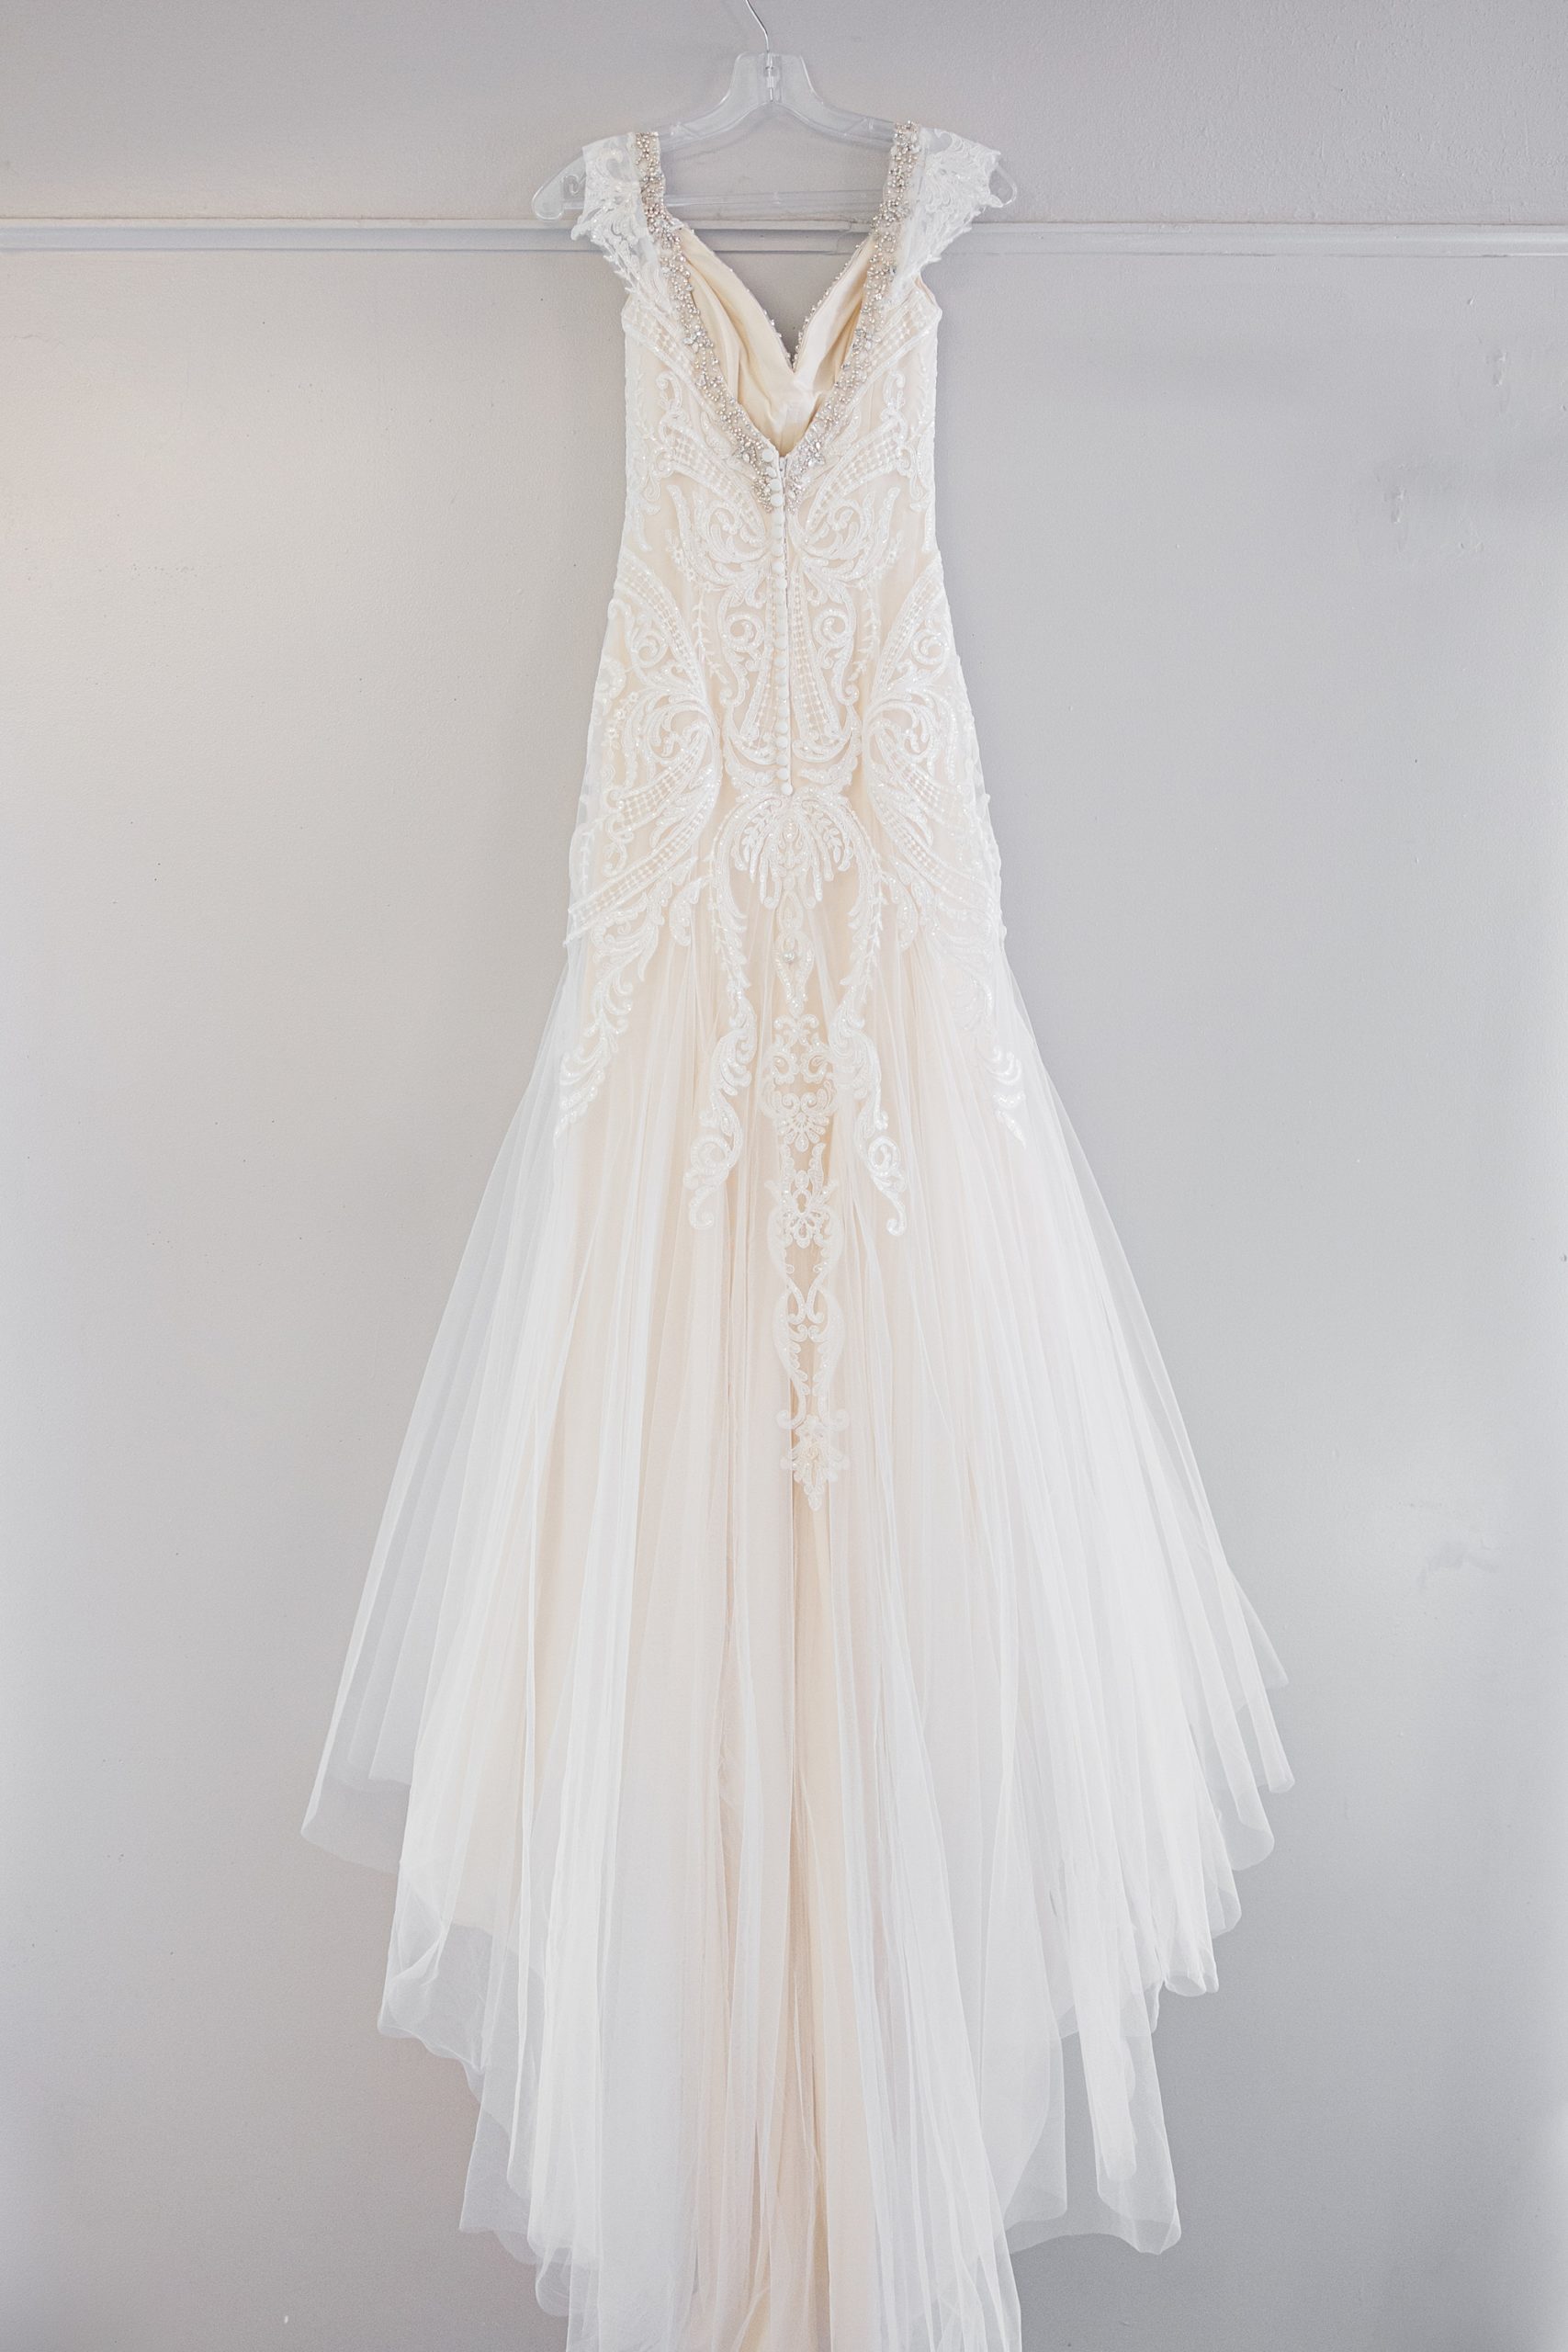 wedding gown hangs for intimate Sedona wedding day